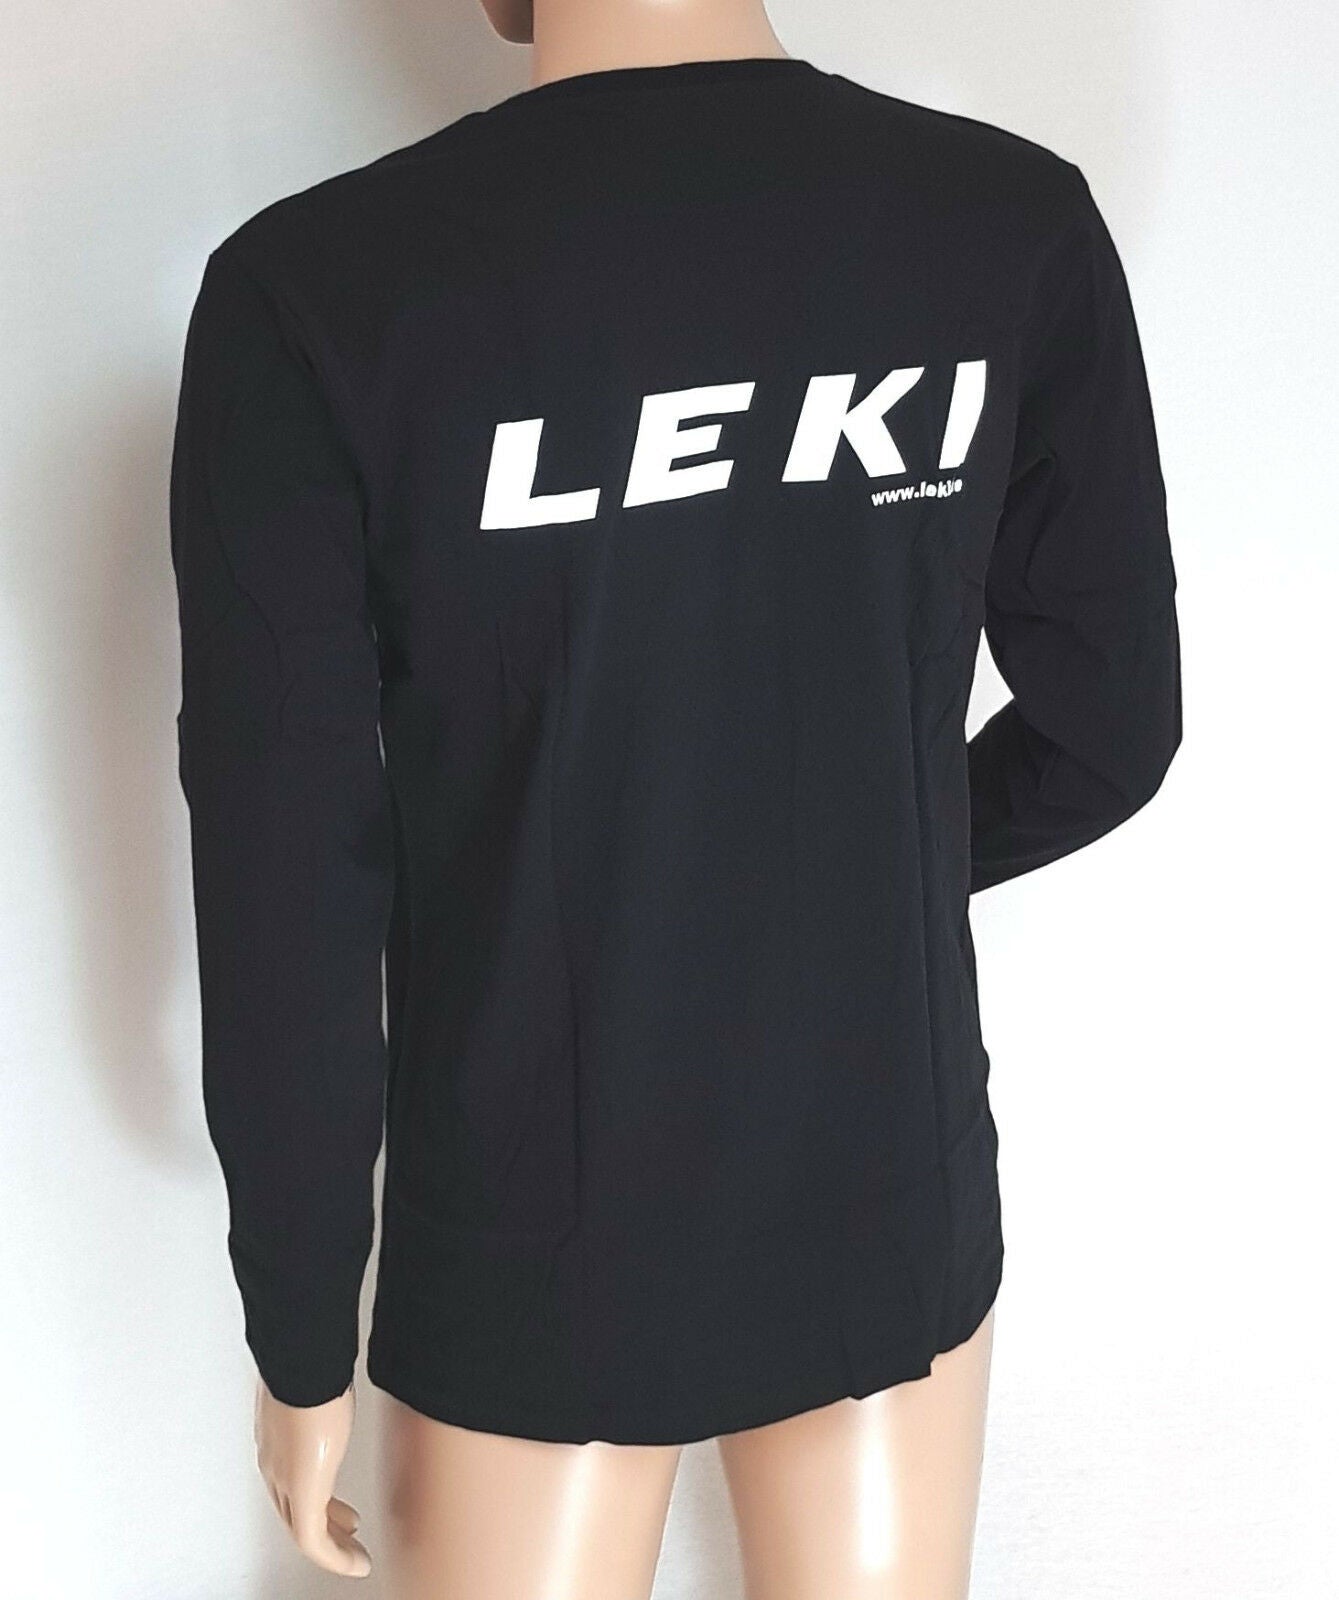 Leki - Langarm Shirt - Longsleeve - 100% Baumwolle - Ski-Shirt - zwei Designs